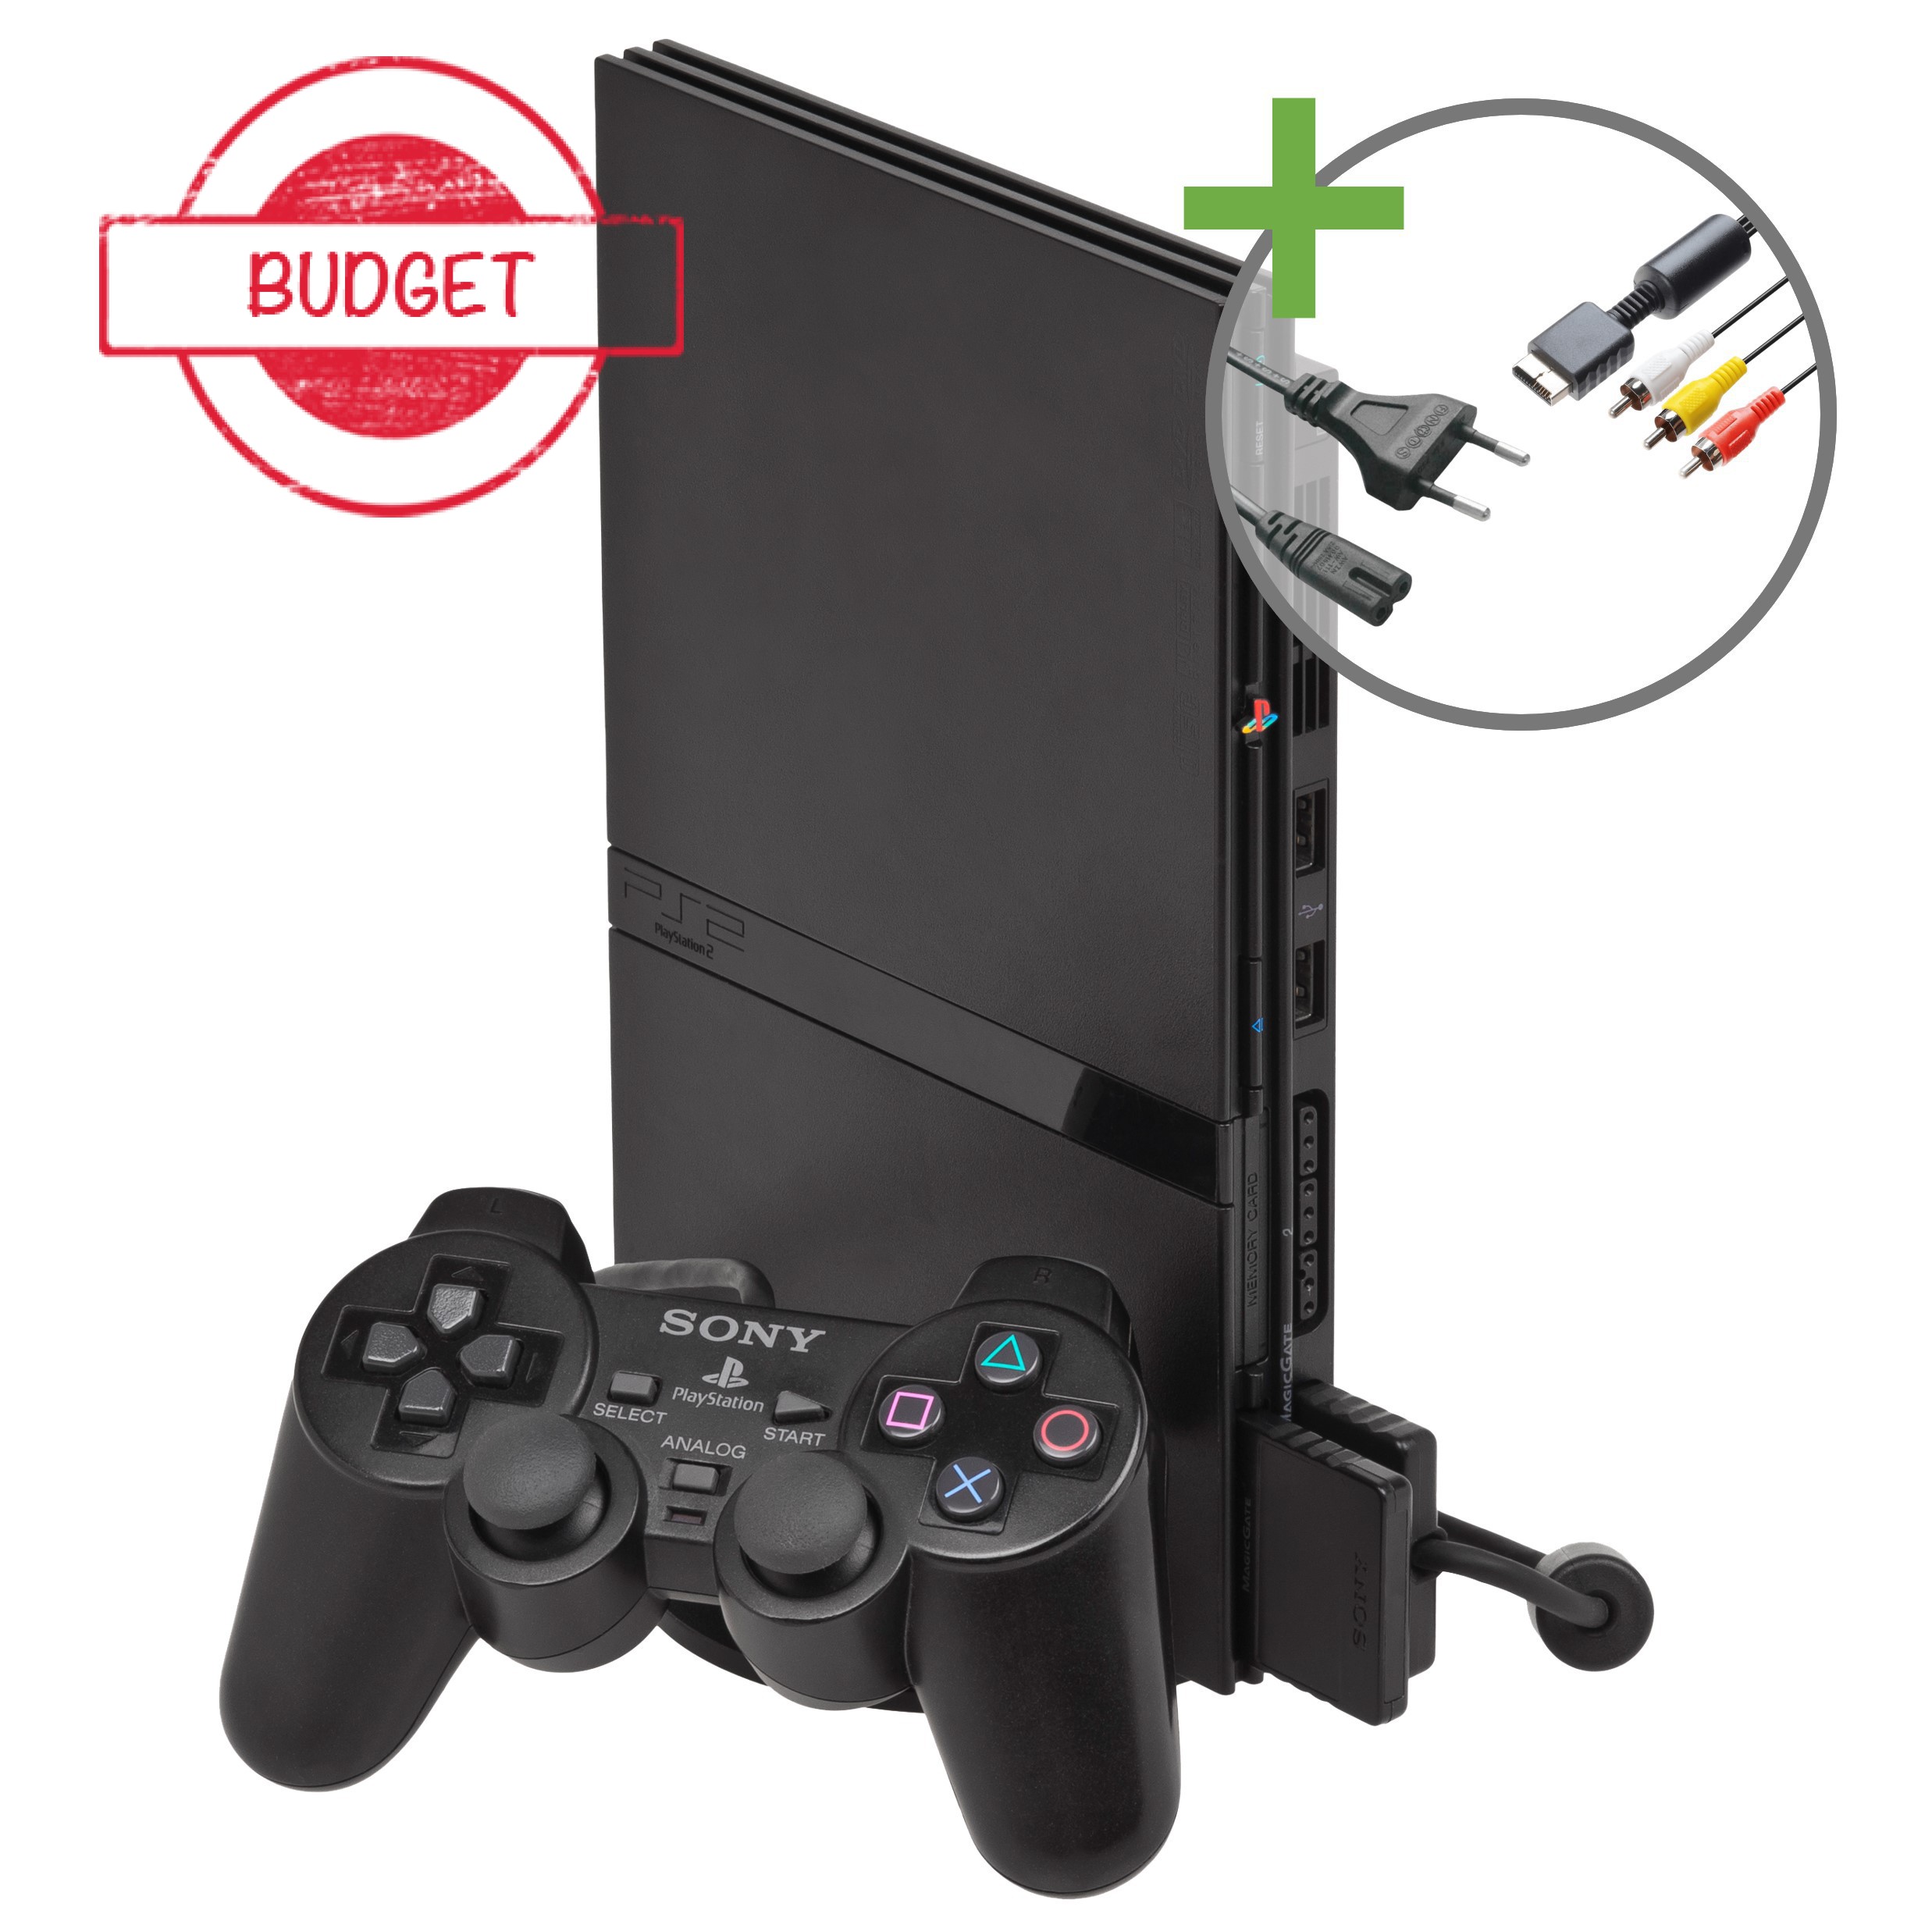 Sony PlayStation 2 Slim Starter Pack - Black Edition - Budget - Playstation 2 Hardware